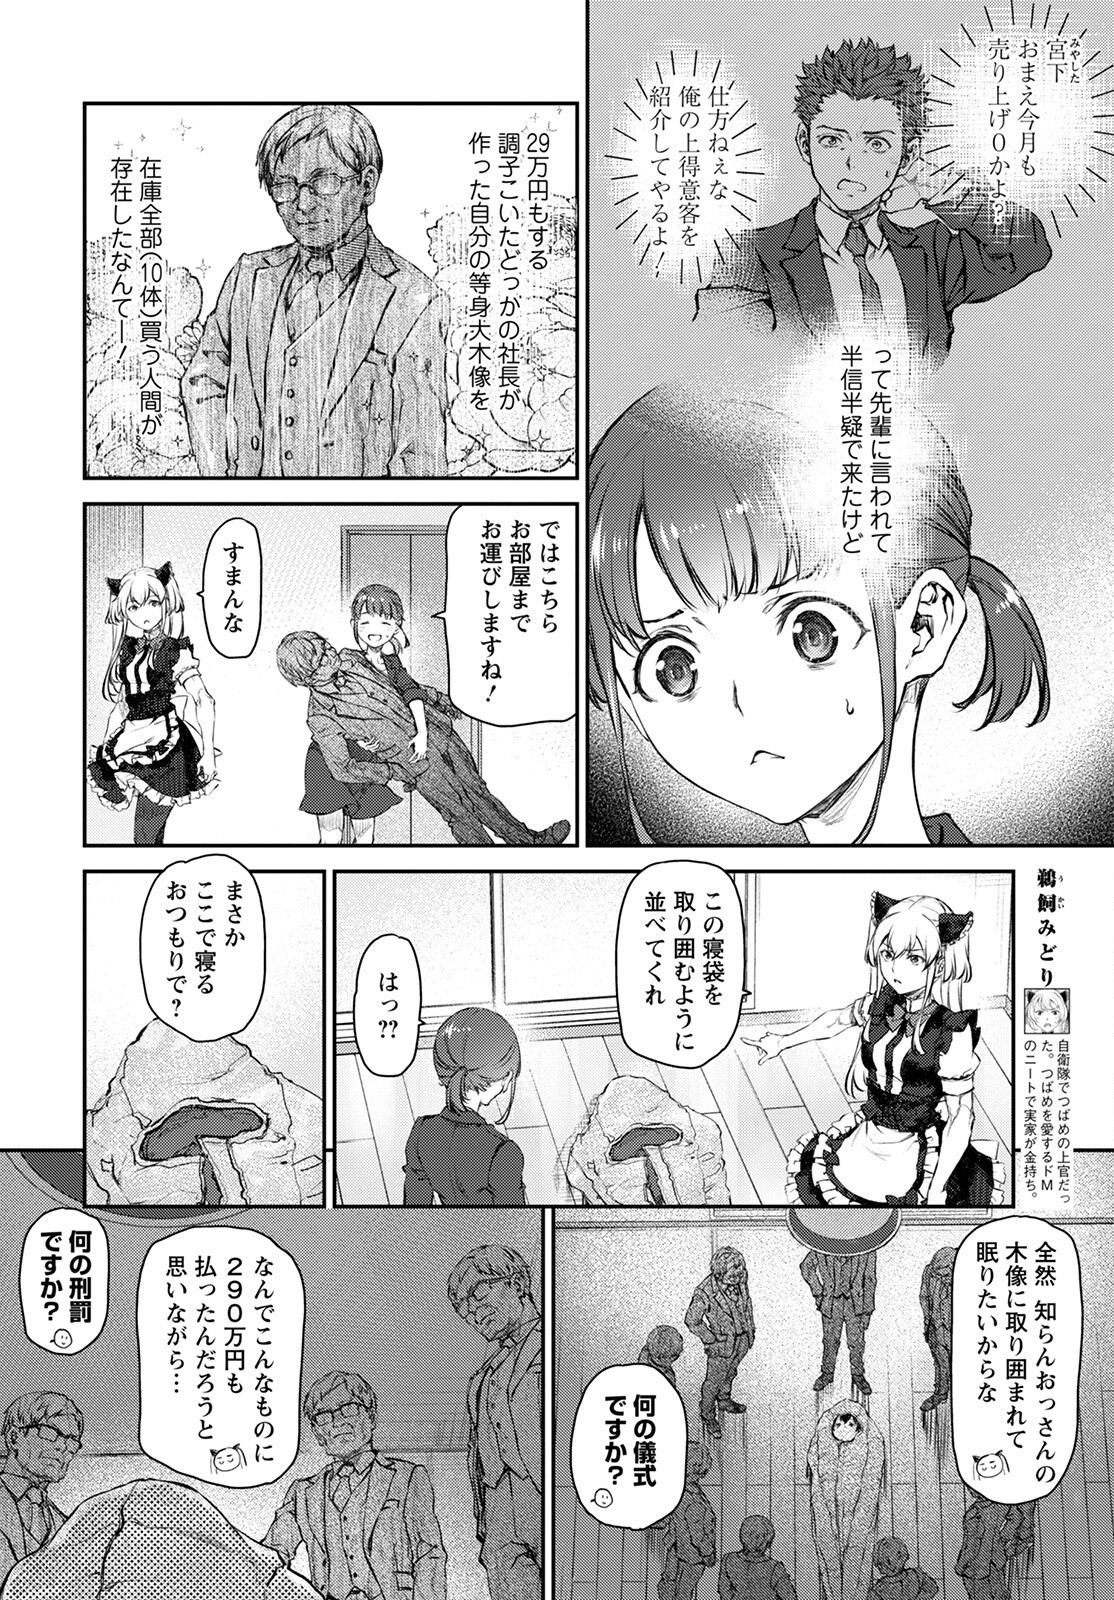 Uchi no Maid ga Uzasugiru! - Chapter 54 - Page 2